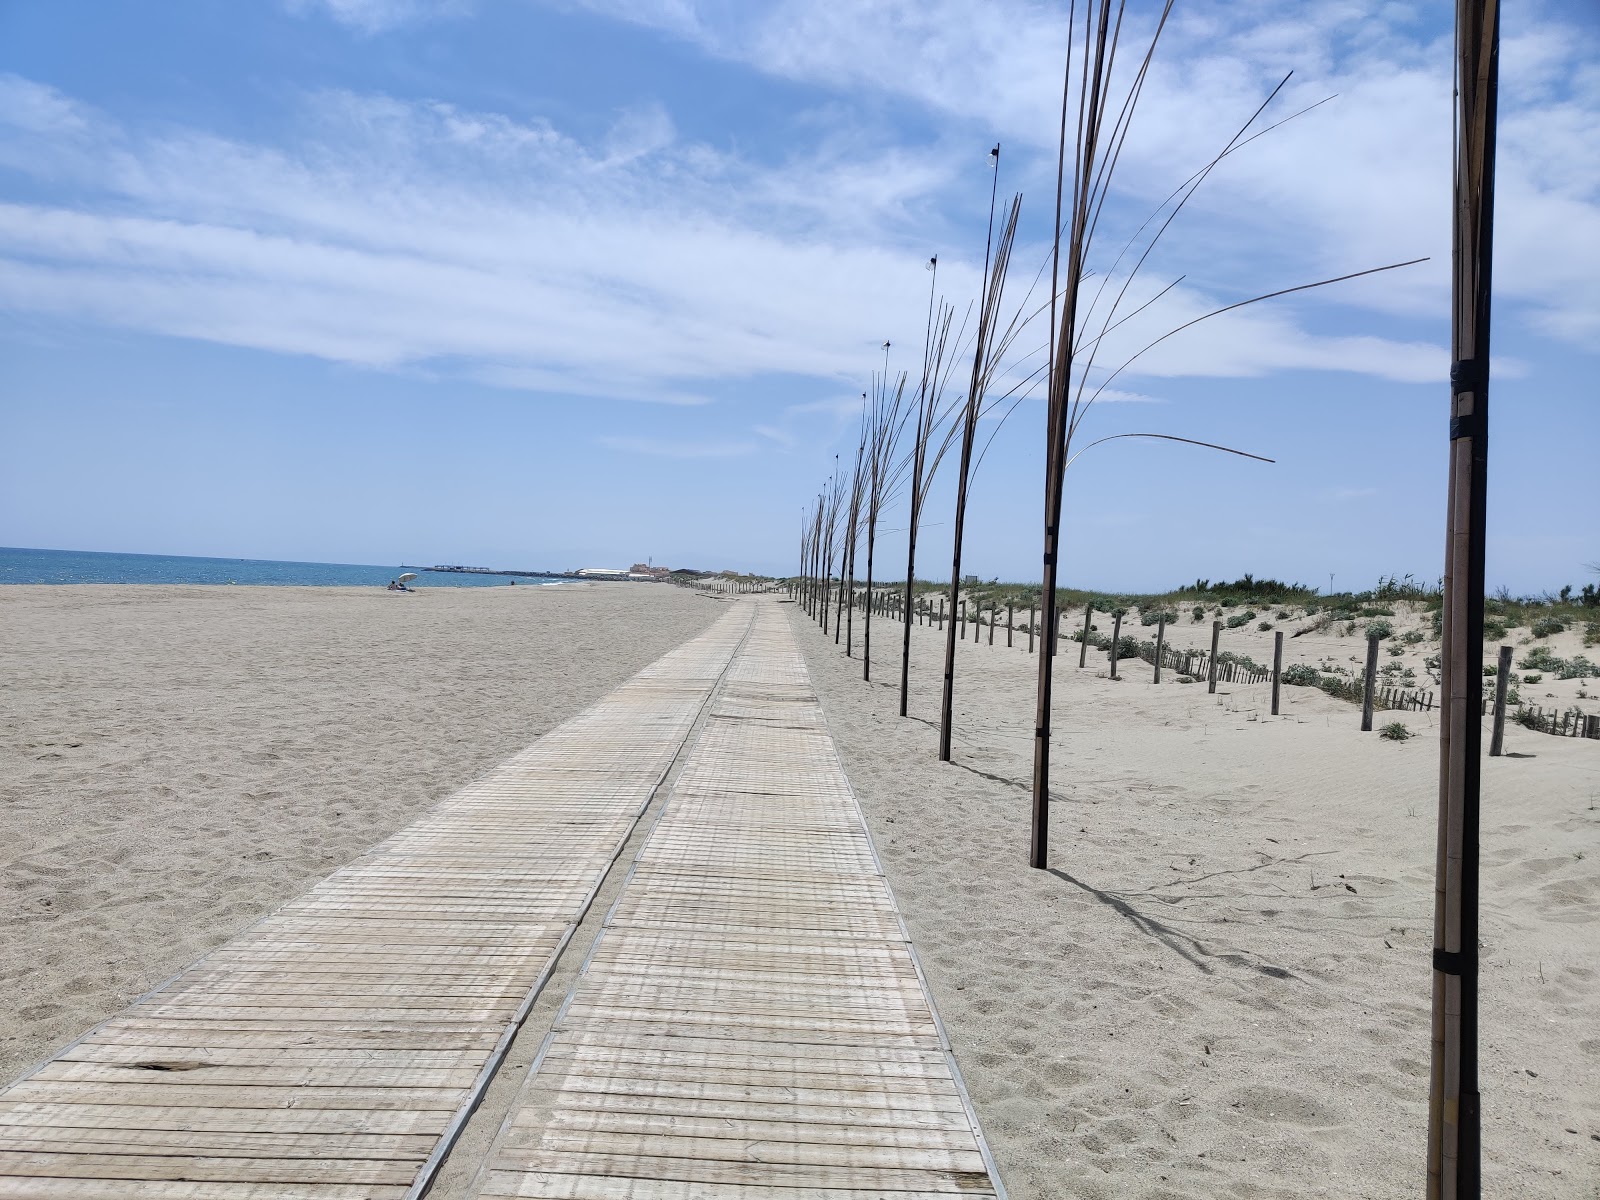 Foto de Praia de Leucate - lugar popular entre os apreciadores de relaxamento